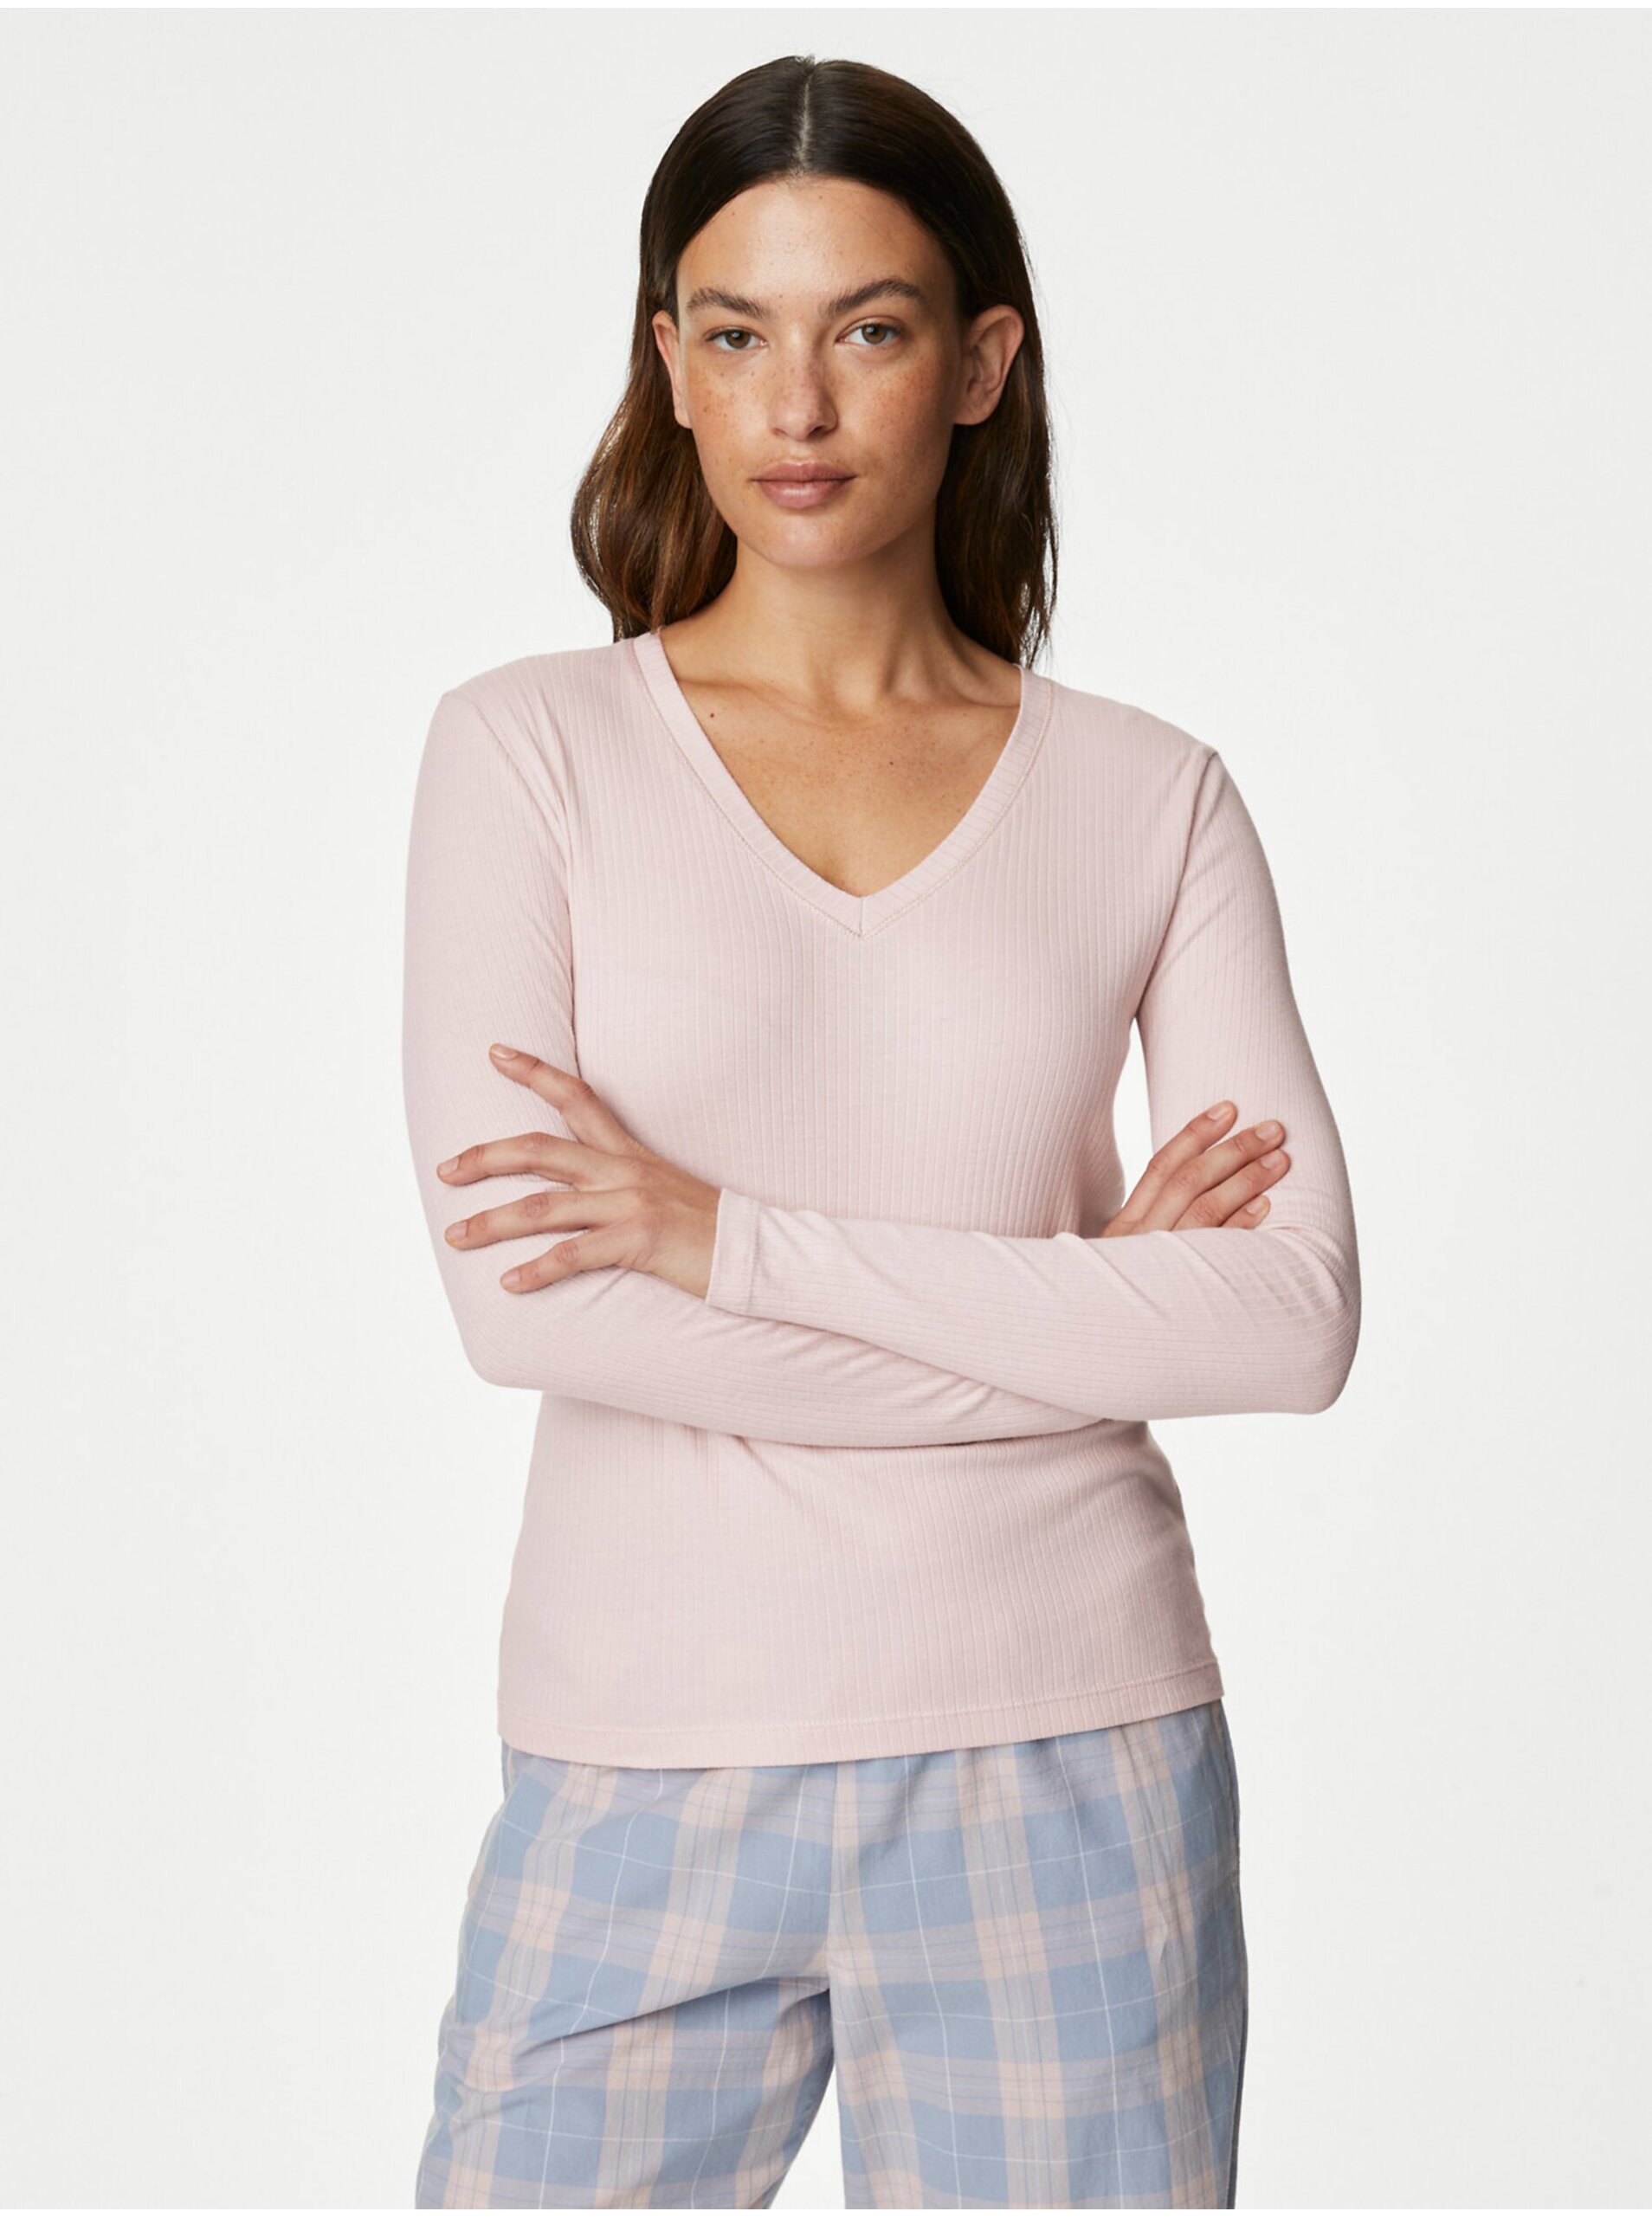 Lacno Svetloružové dámske rebrované pyžamové tričko s úpravou Cool Comfort™ Marks & Spencer